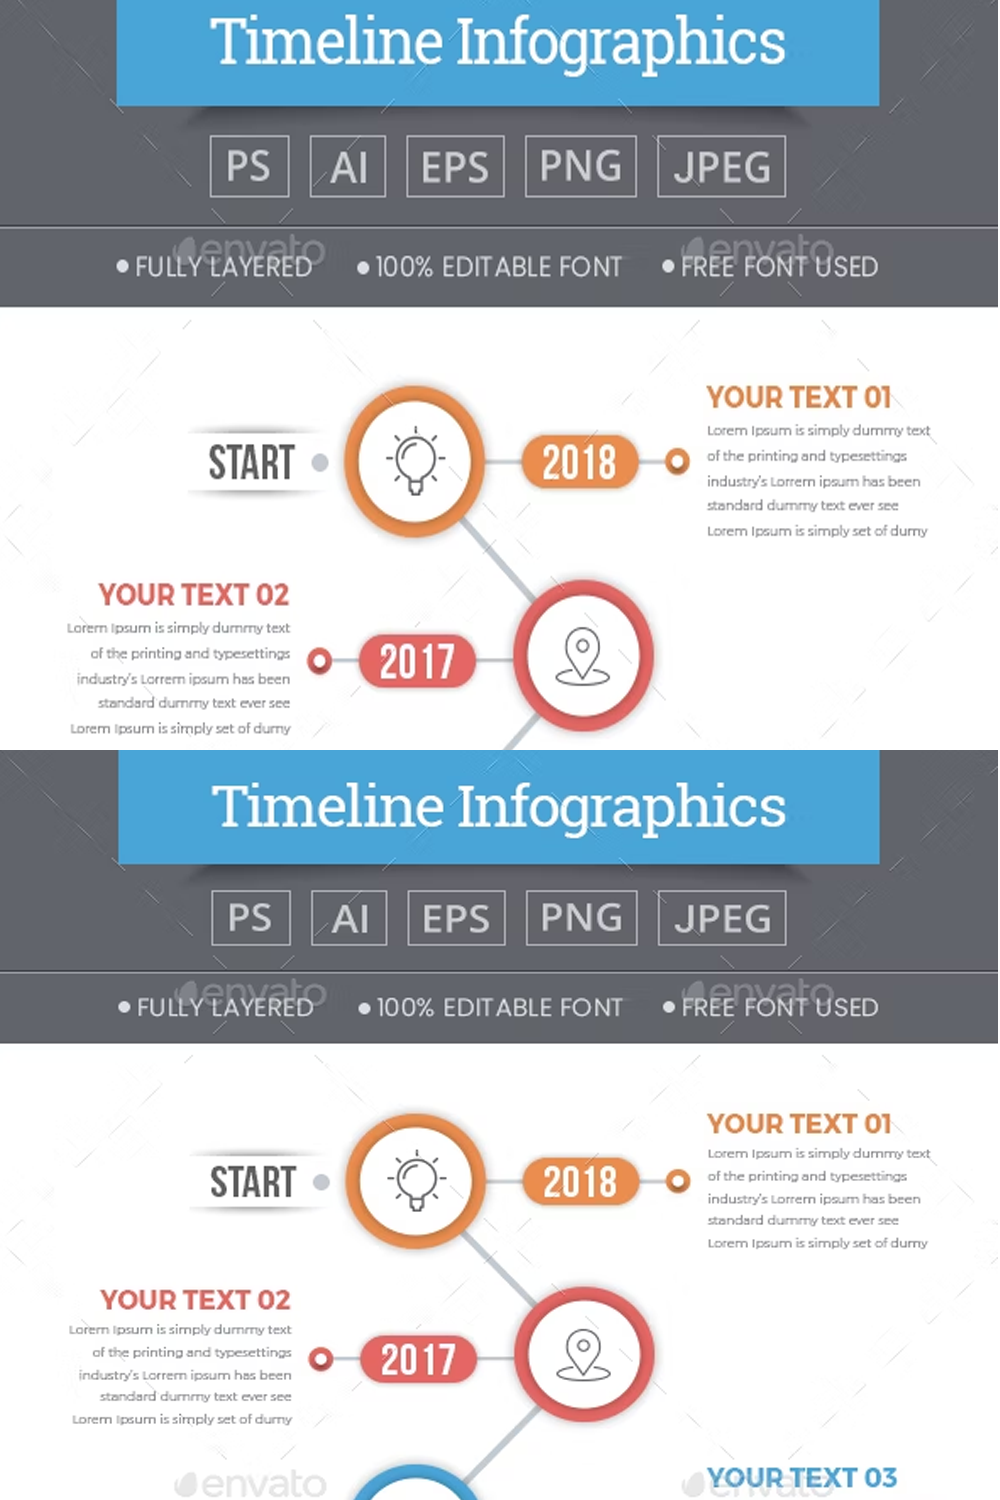 Illustrations vertical timeline infographics of pinterest.